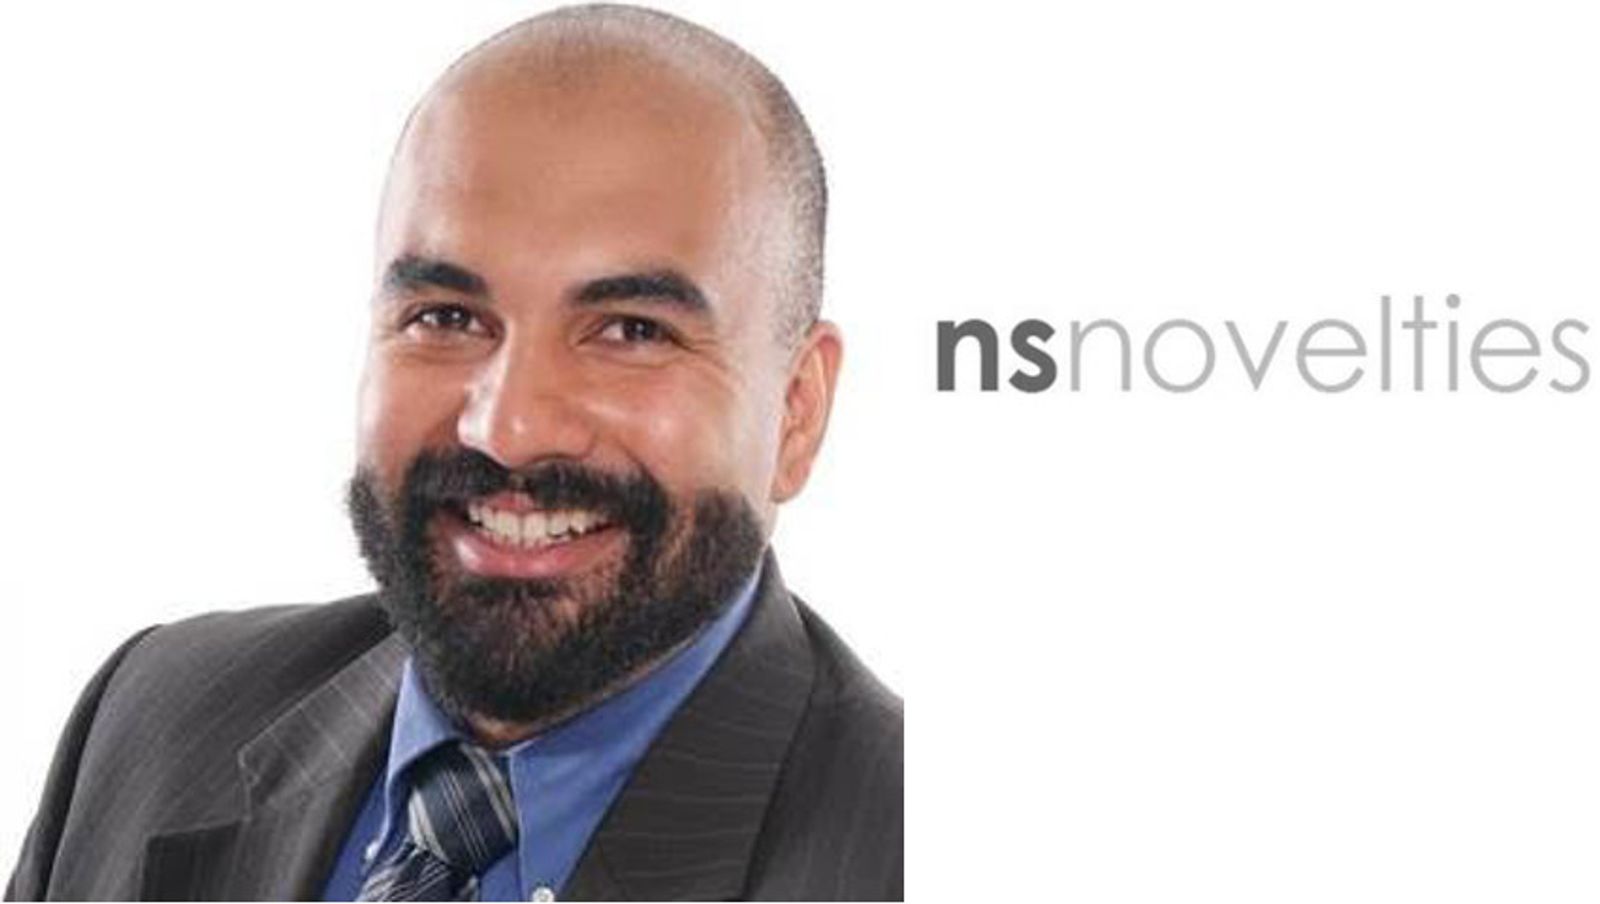 Jesus Ruiz Joins NS Novelties Sales Team